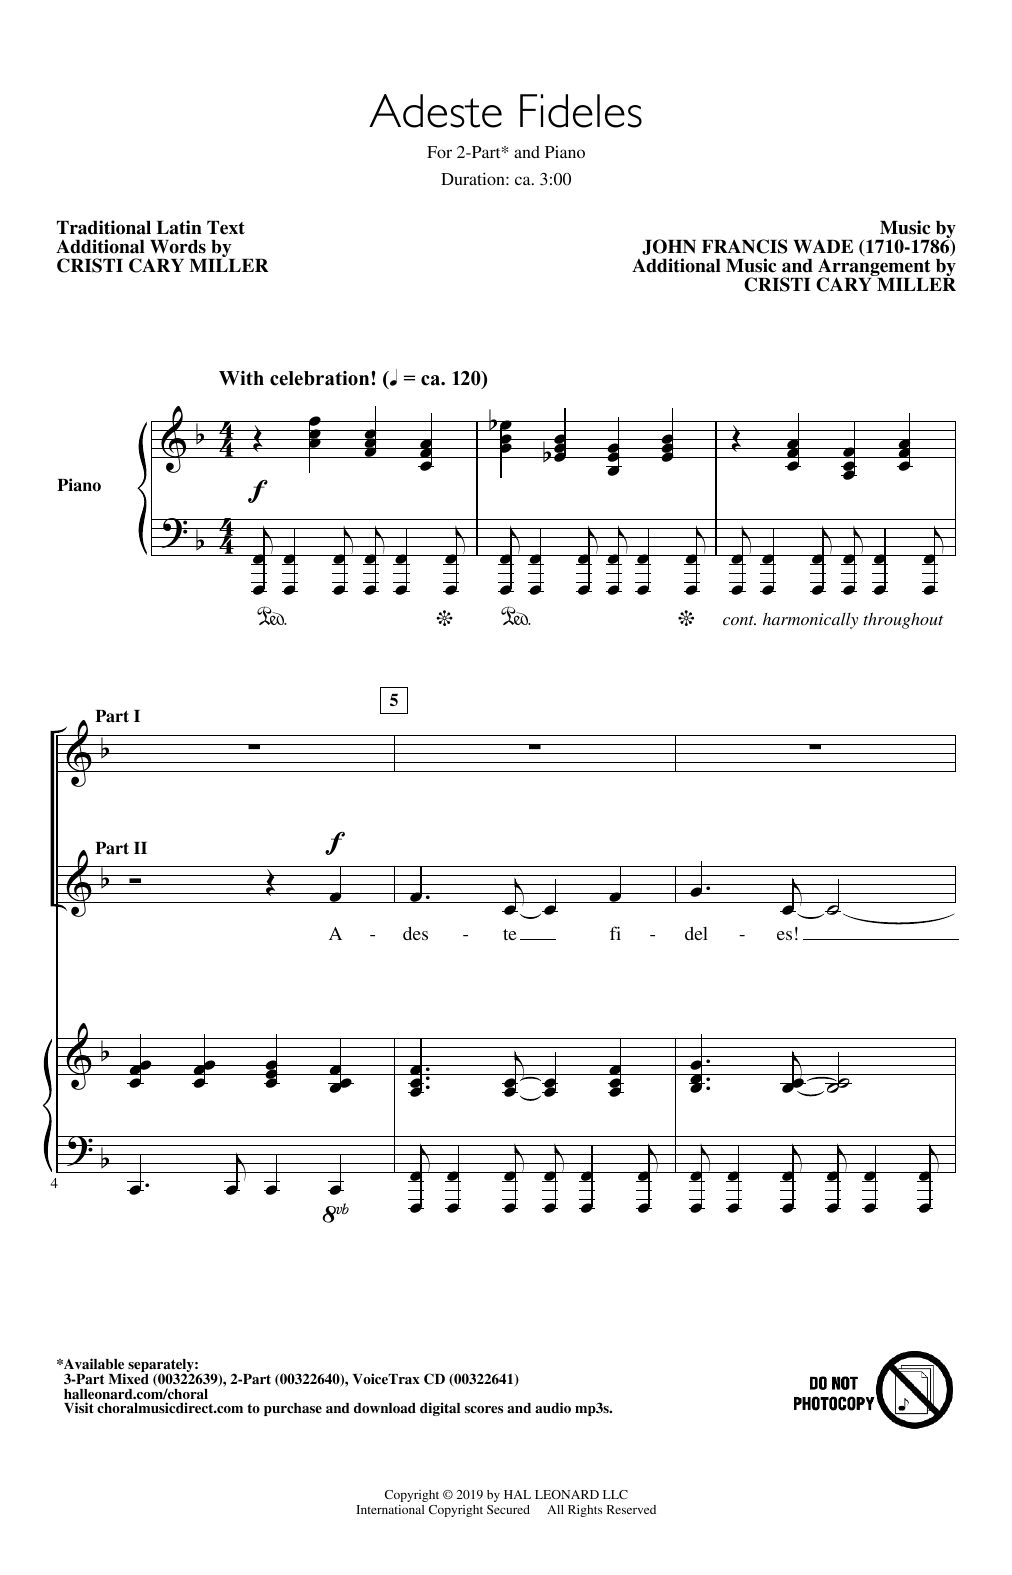 John Francis Wade Adeste Fideles (arr. Cristi Cary Miller) sheet music notes and chords arranged for 2-Part Choir